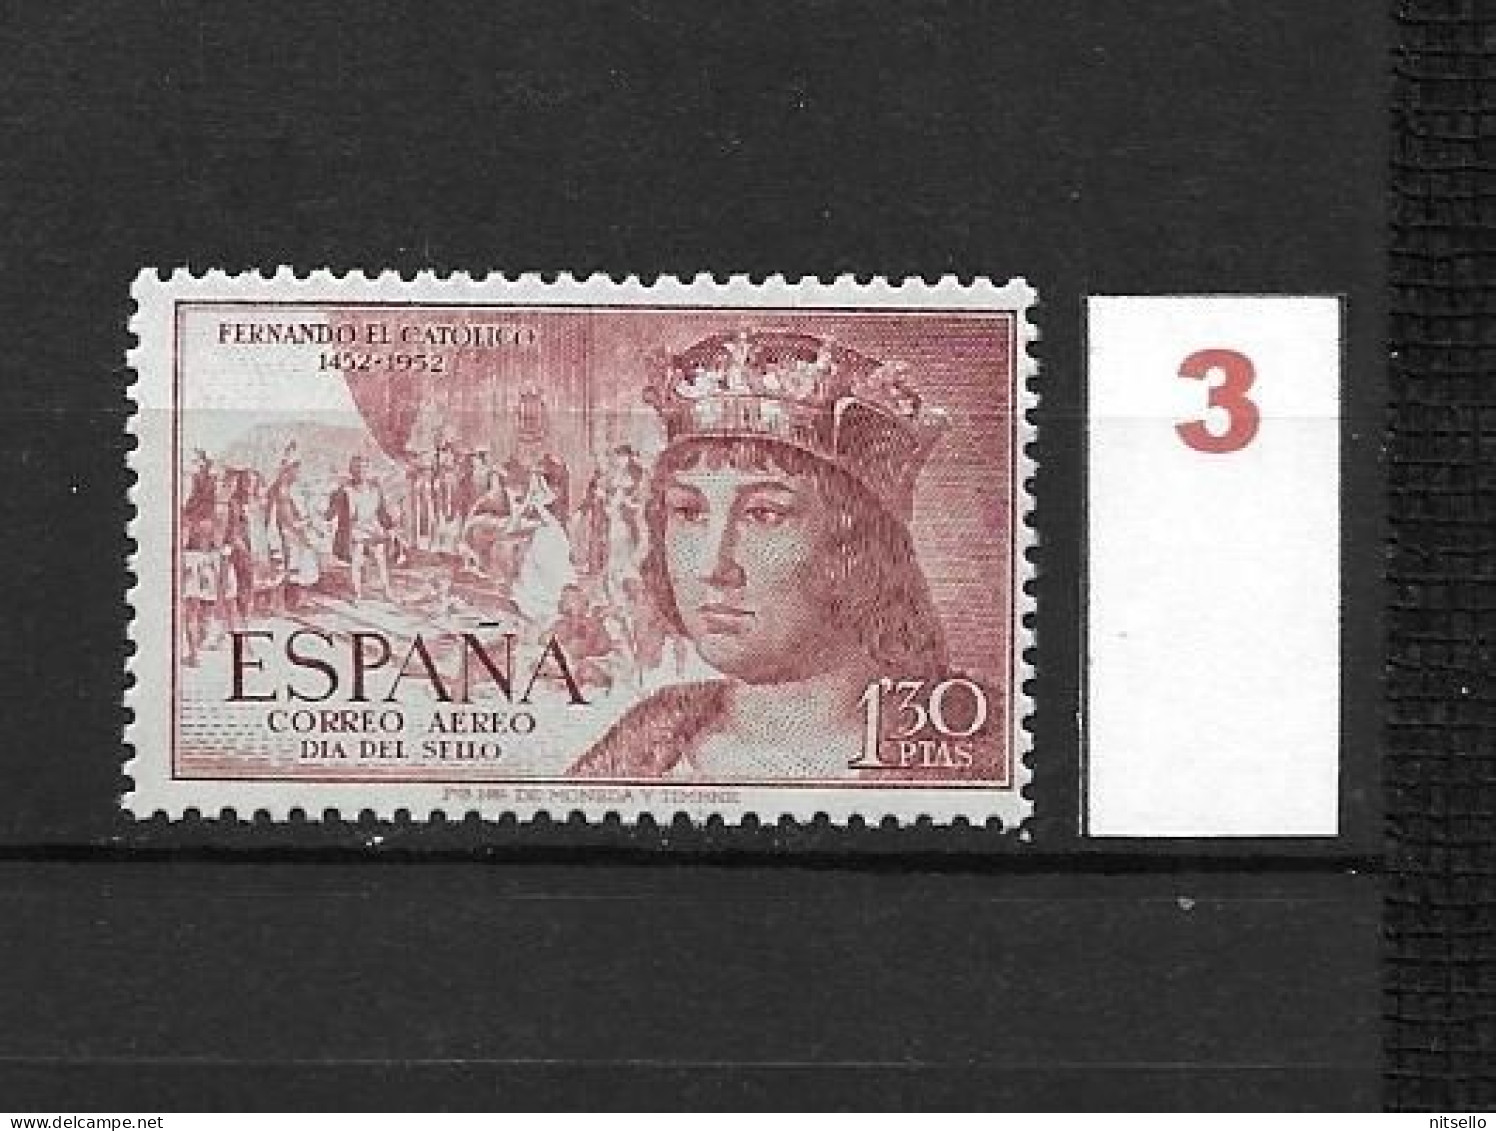 LOTE 2000 /// (C020) ESPAÑA 1952  EDIFIL Nº: 1113 **MNH  ¡¡¡ OFERTA - LIQUIDATION - JE LIQUIDE !!! - Unused Stamps